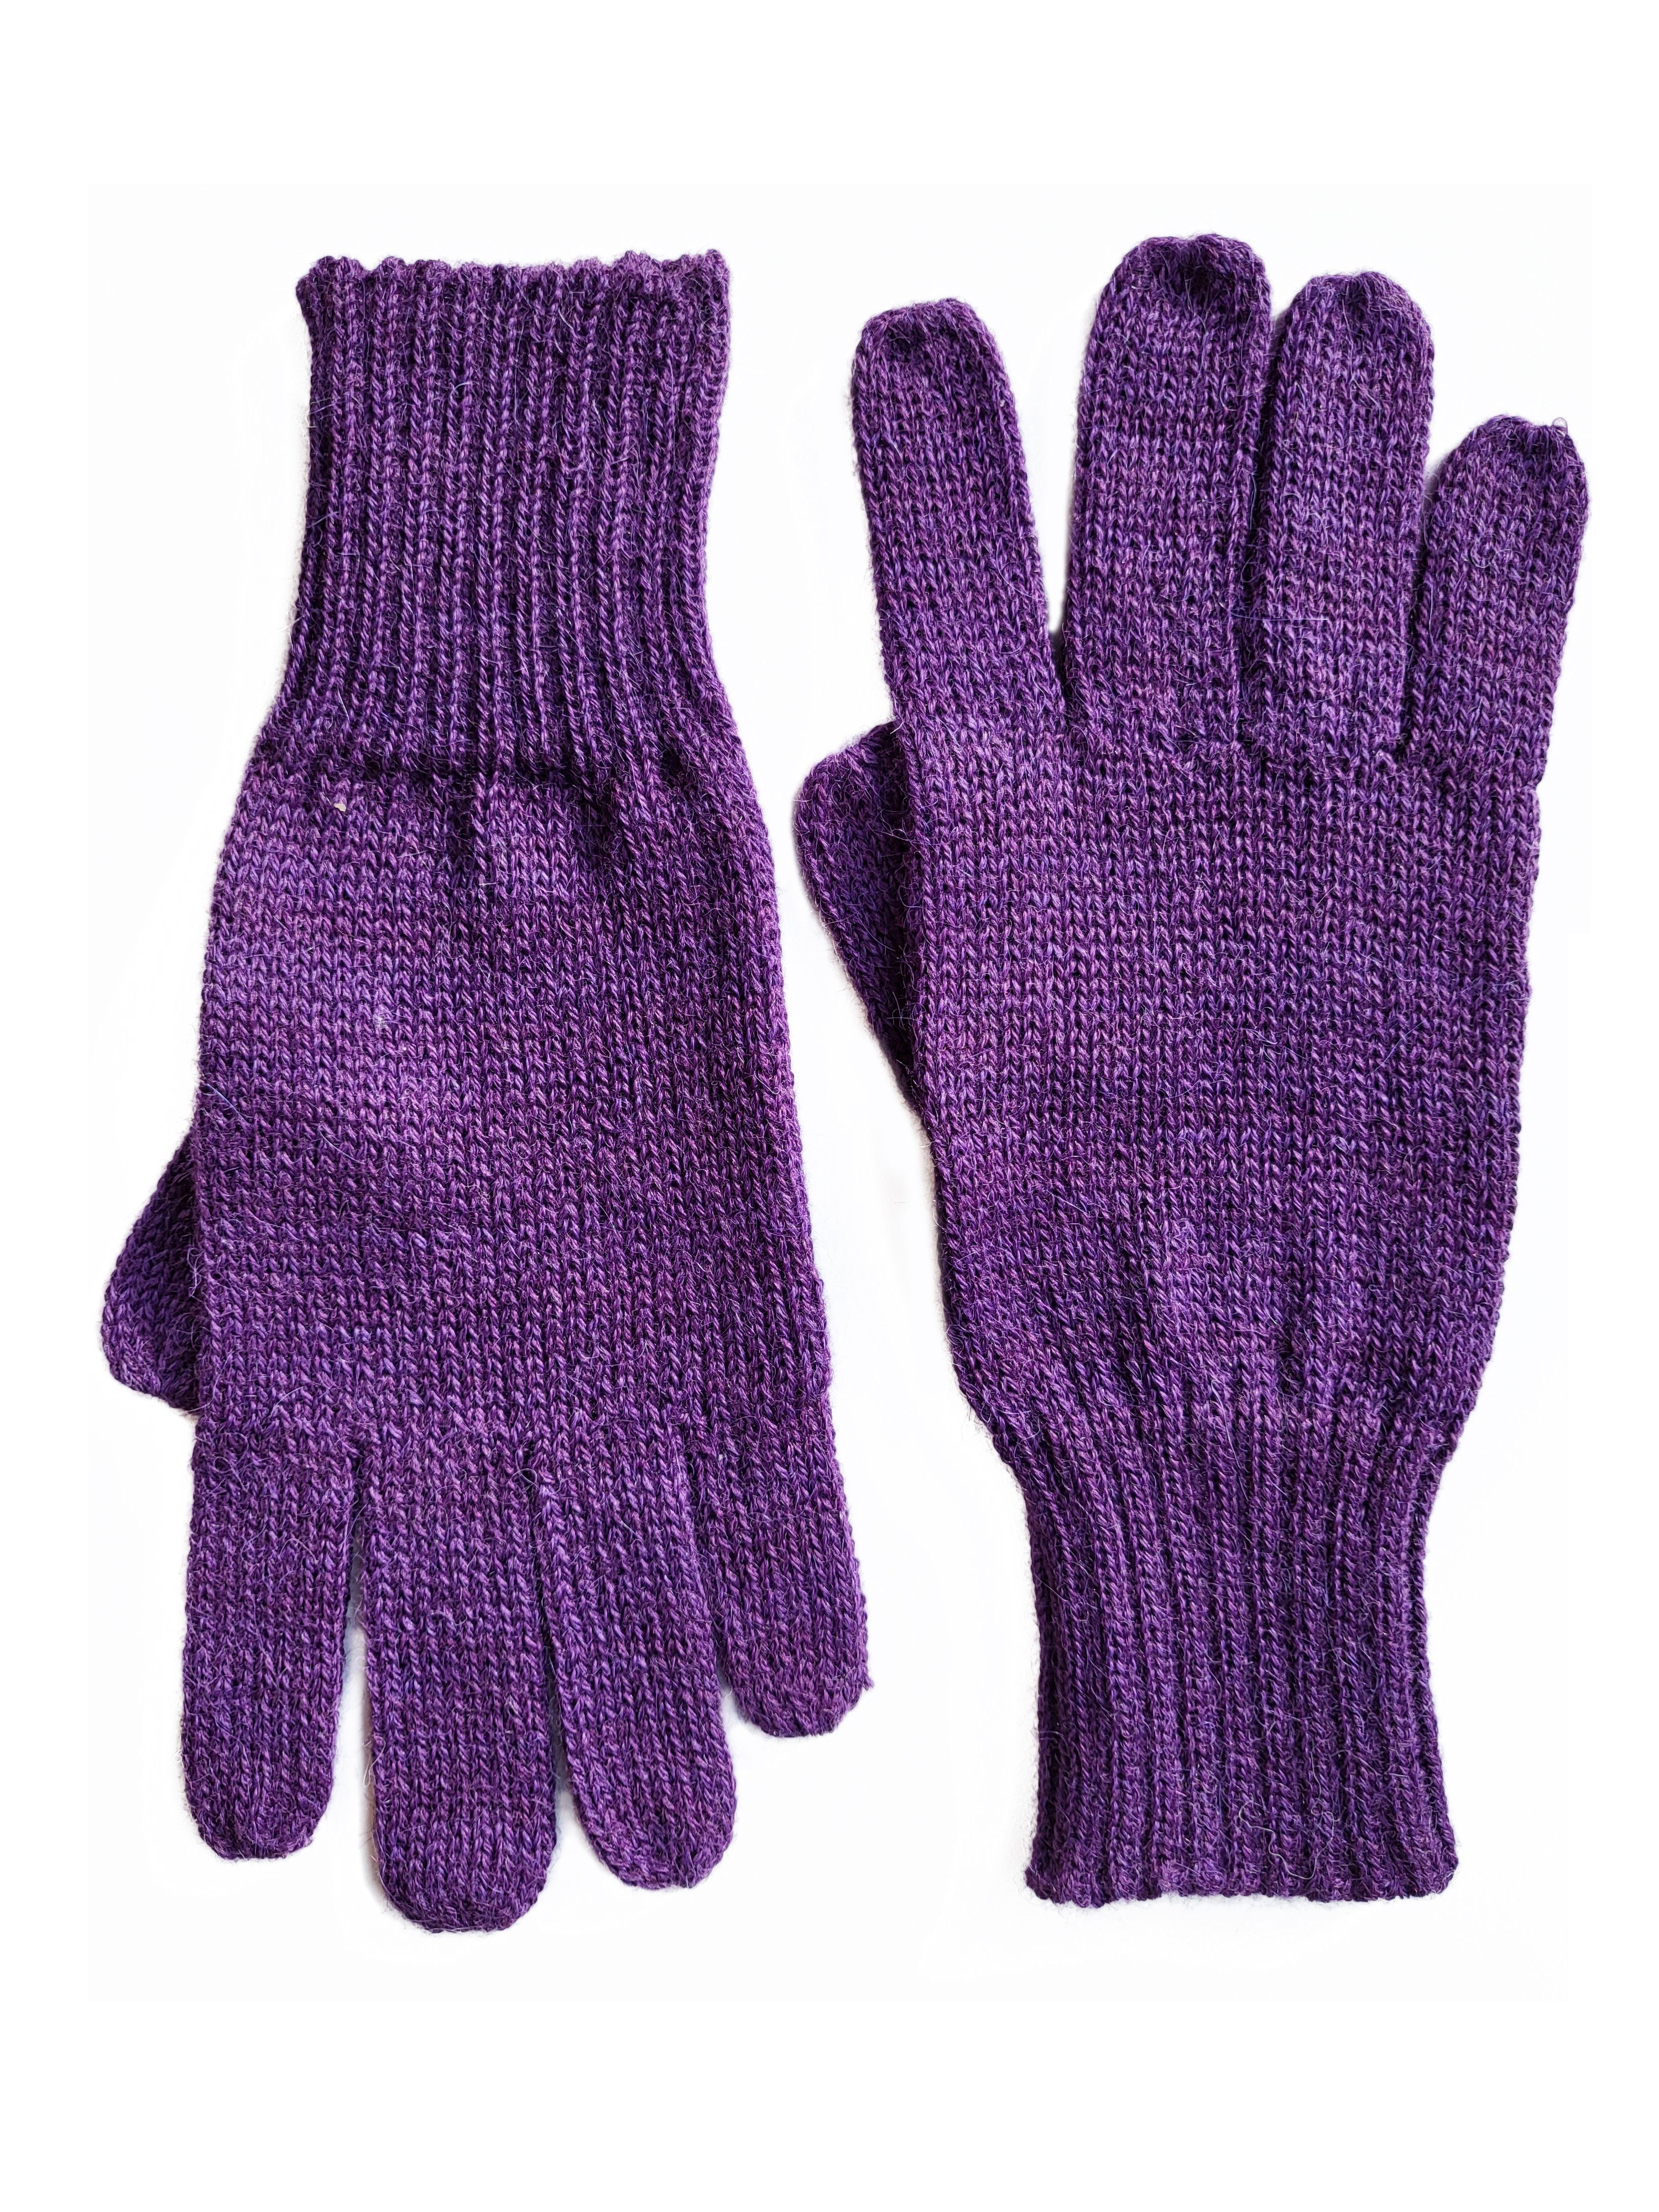 Posh Gear Strickhandschuhe Guantino Alpaka Fingerhandschuhe 100% Alpakawolle lila aus